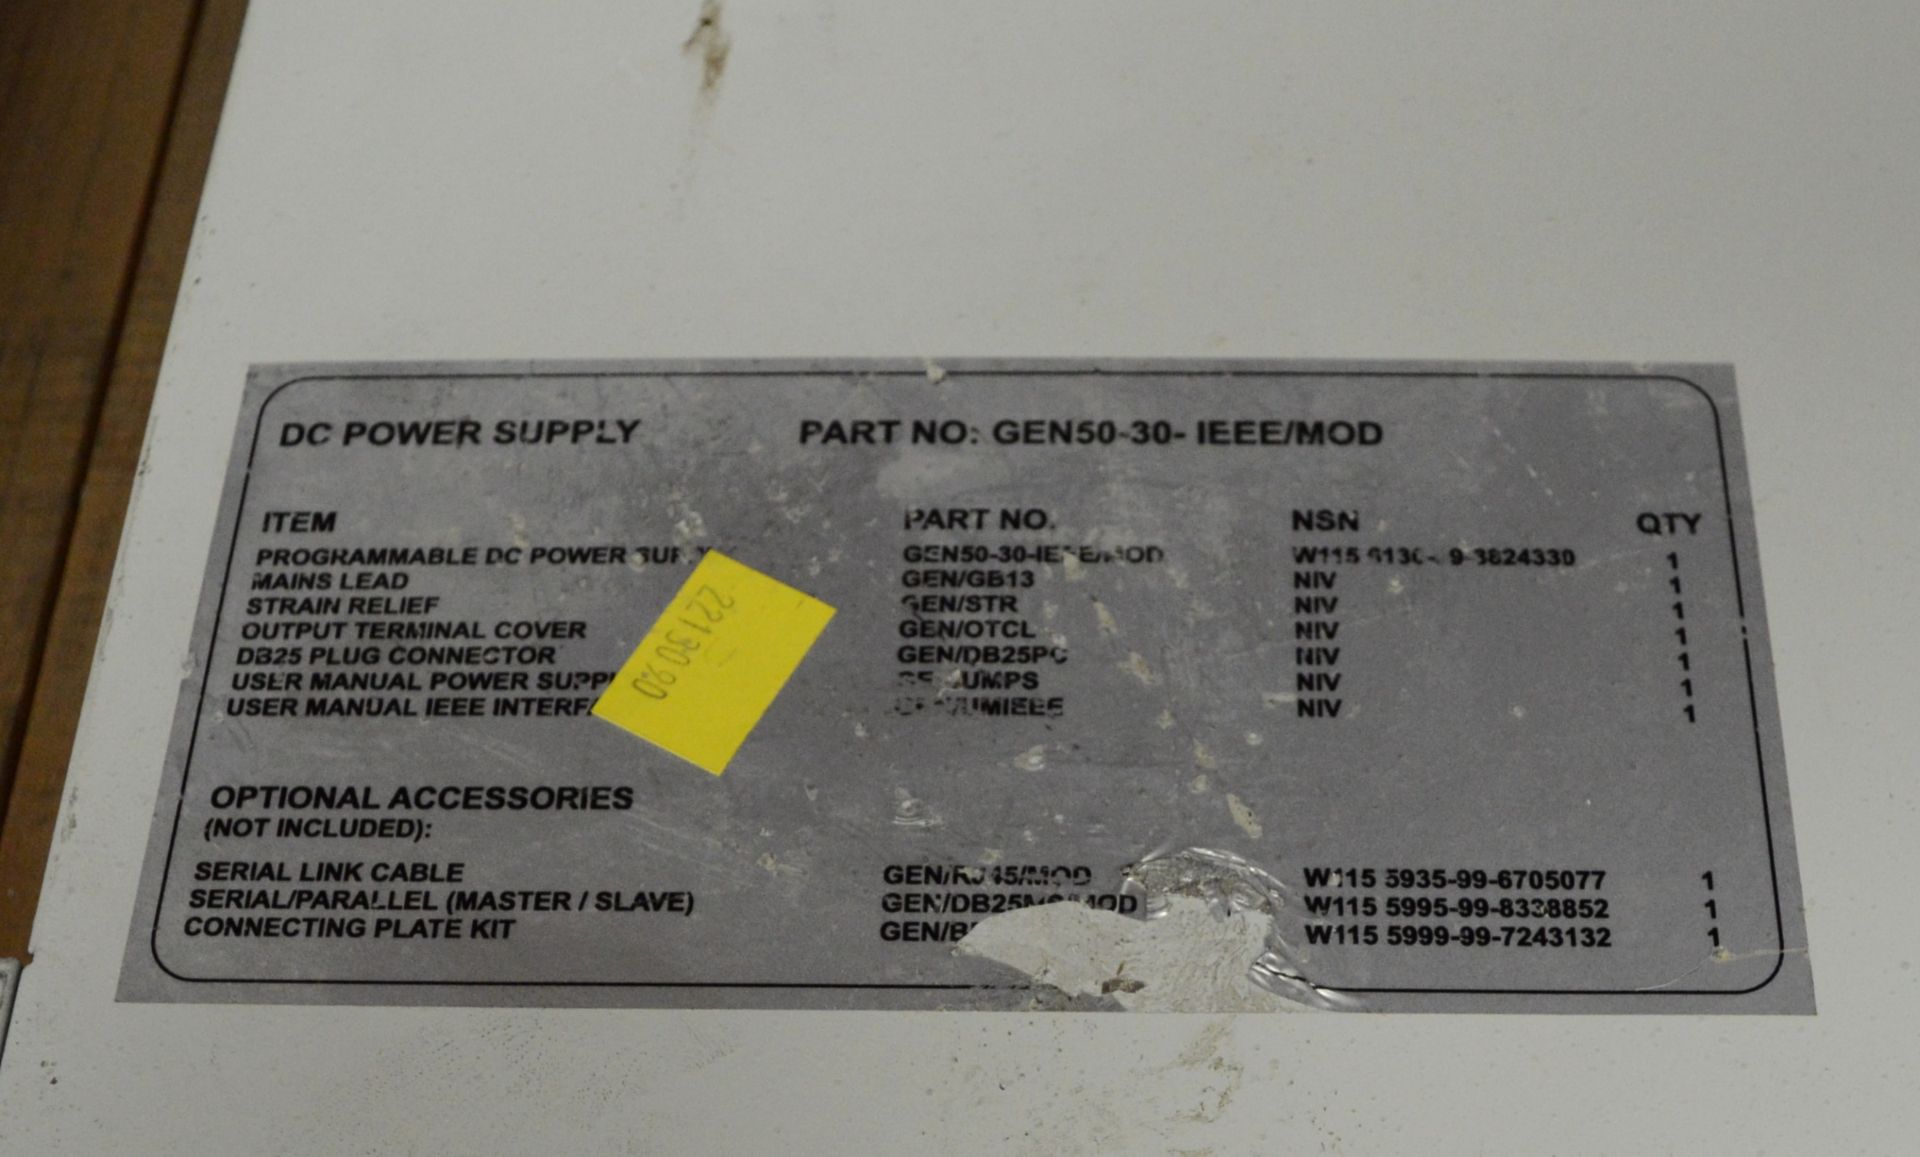 DC power supply Gen 50-34 - Image 2 of 2